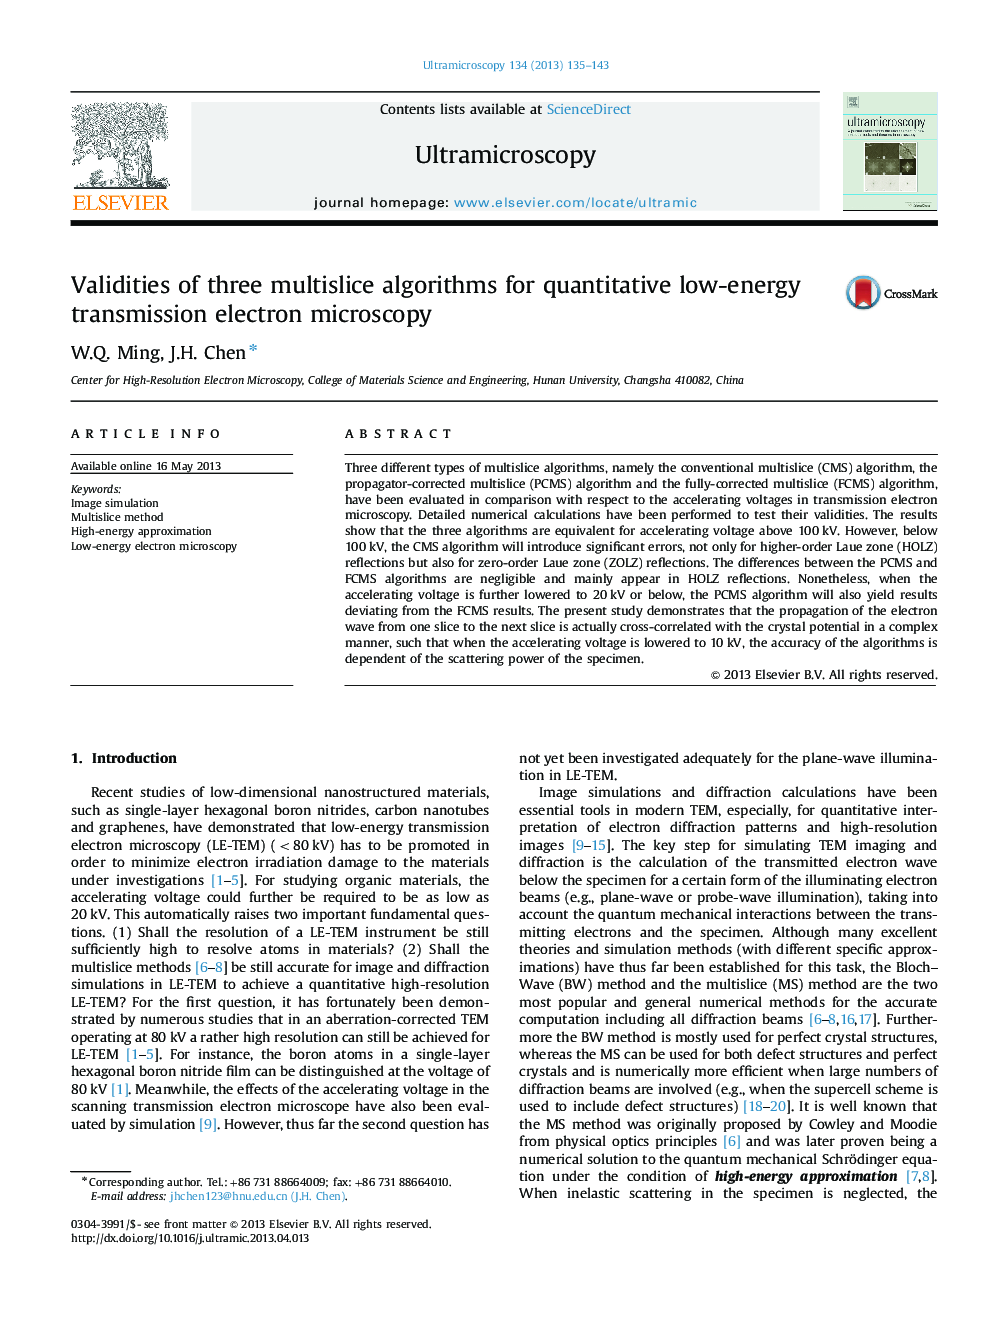 Validities of three multislice algorithms for quantitative low-energy transmission electron microscopy